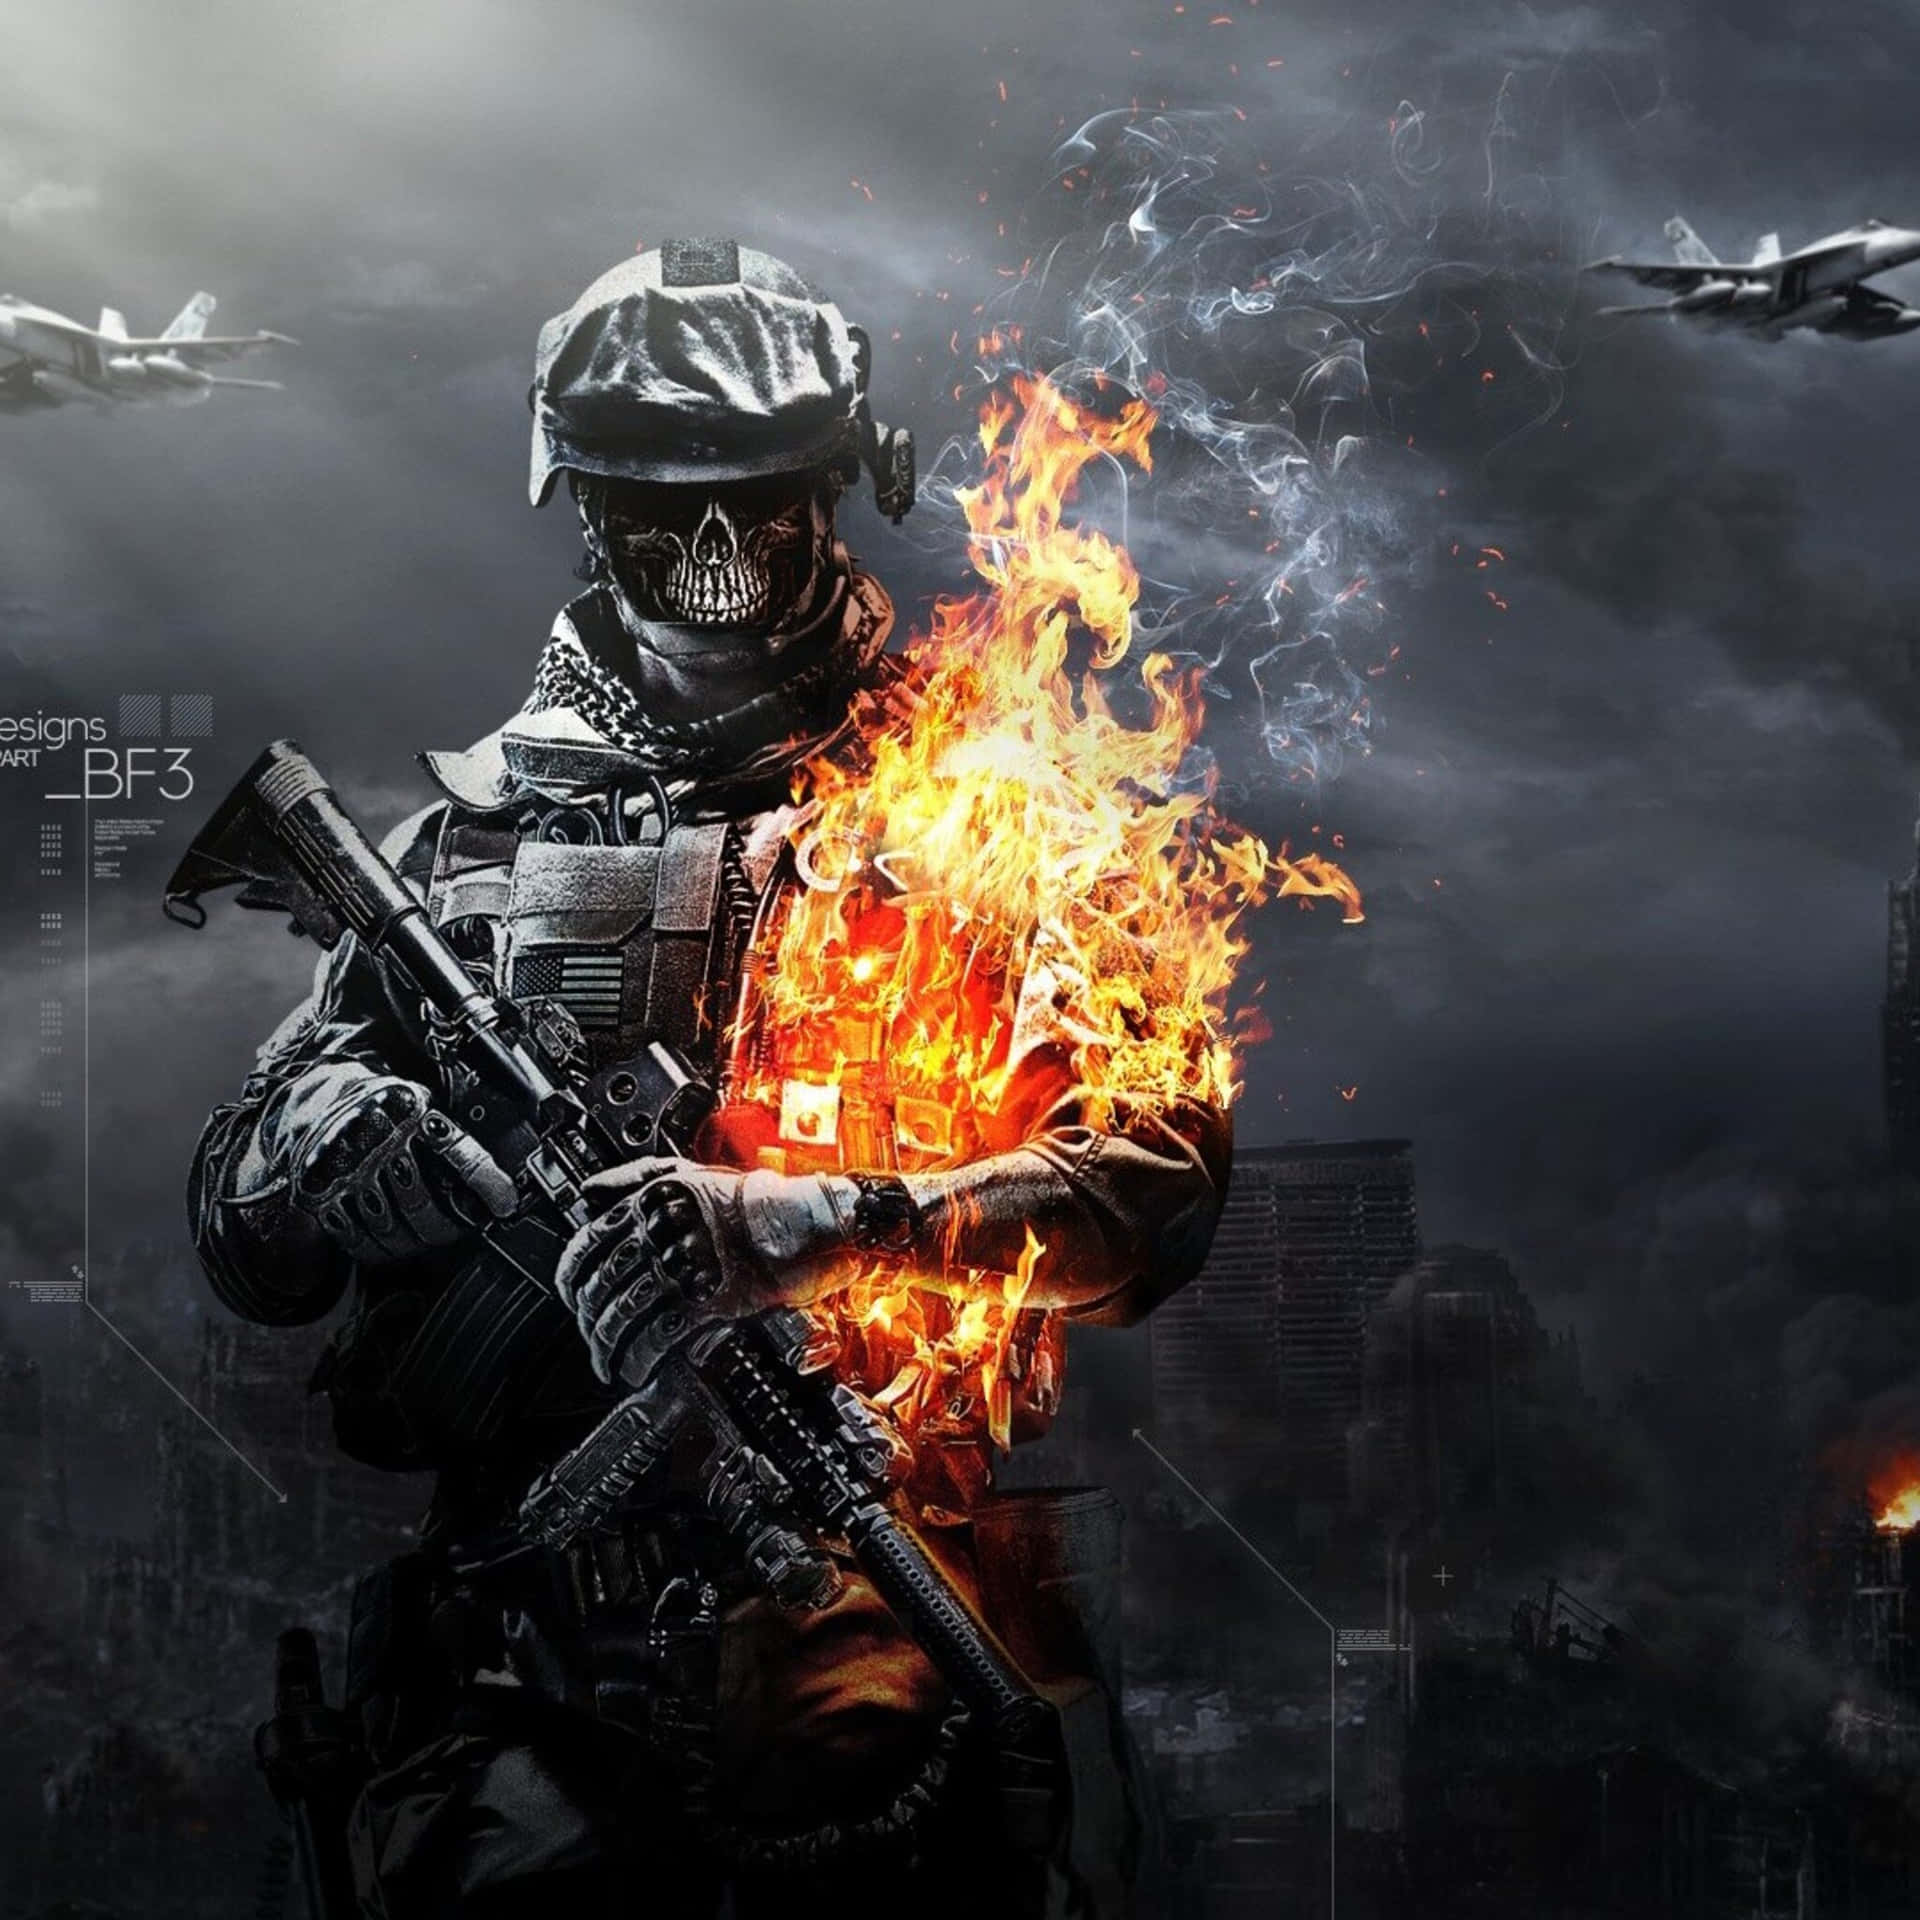 Become an adrenaline-filled battlefield soldier in Battlefield 4!